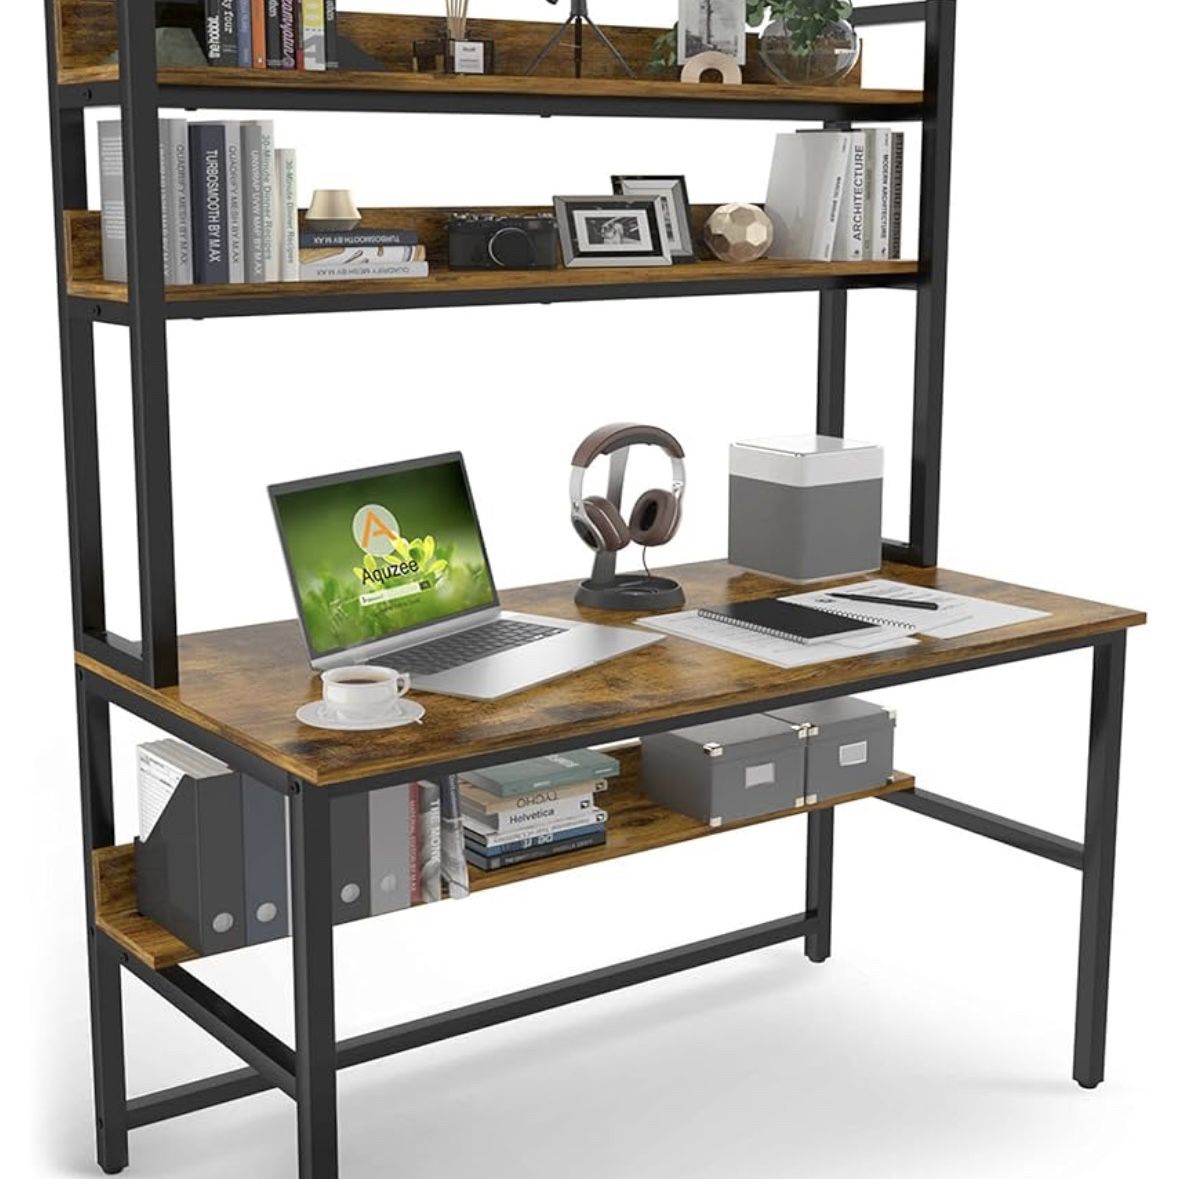 Office/Study Desk with Hutch & Bookshelf, Home Office Desk